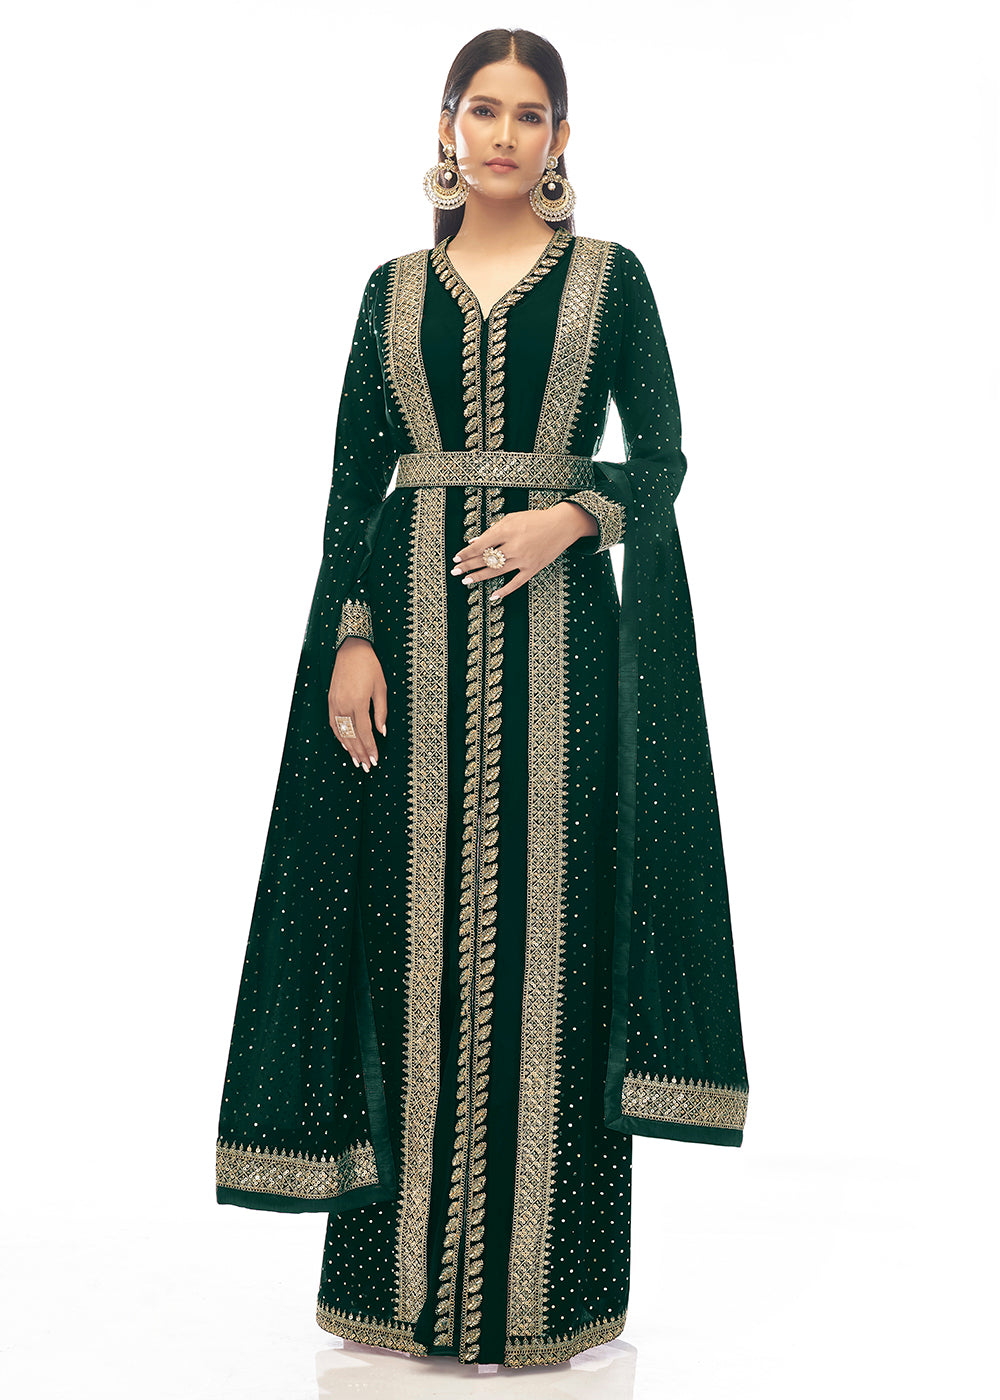 Buy Now Premium Georgette Amazonas Green Jacket Style Anarkali Dress Online in UK at Empress Clothing